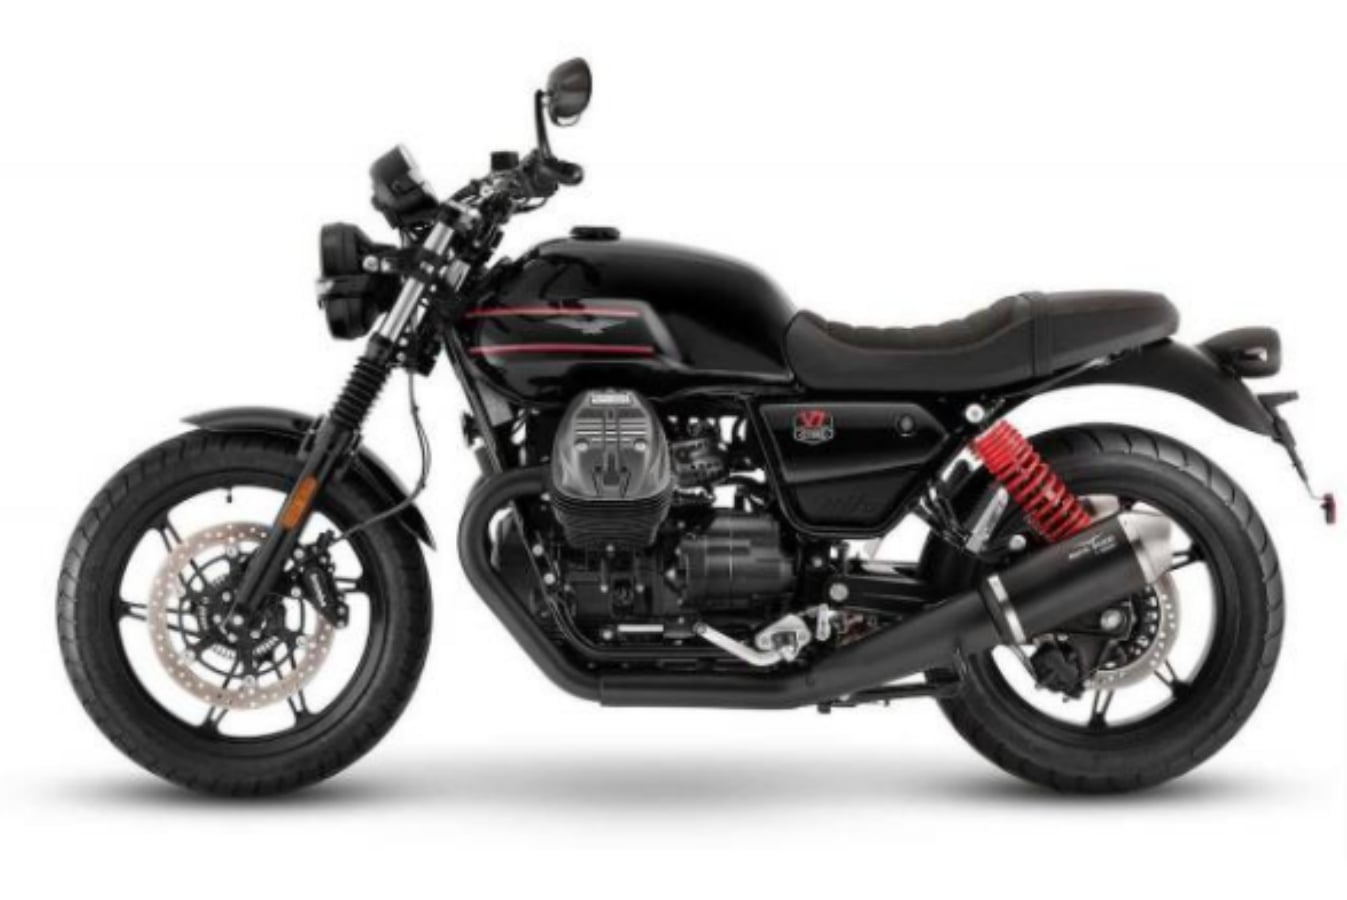 Rayakan Anniversary ke-100, Moto Guzzi Luncurkan V7 Stone Special Edition